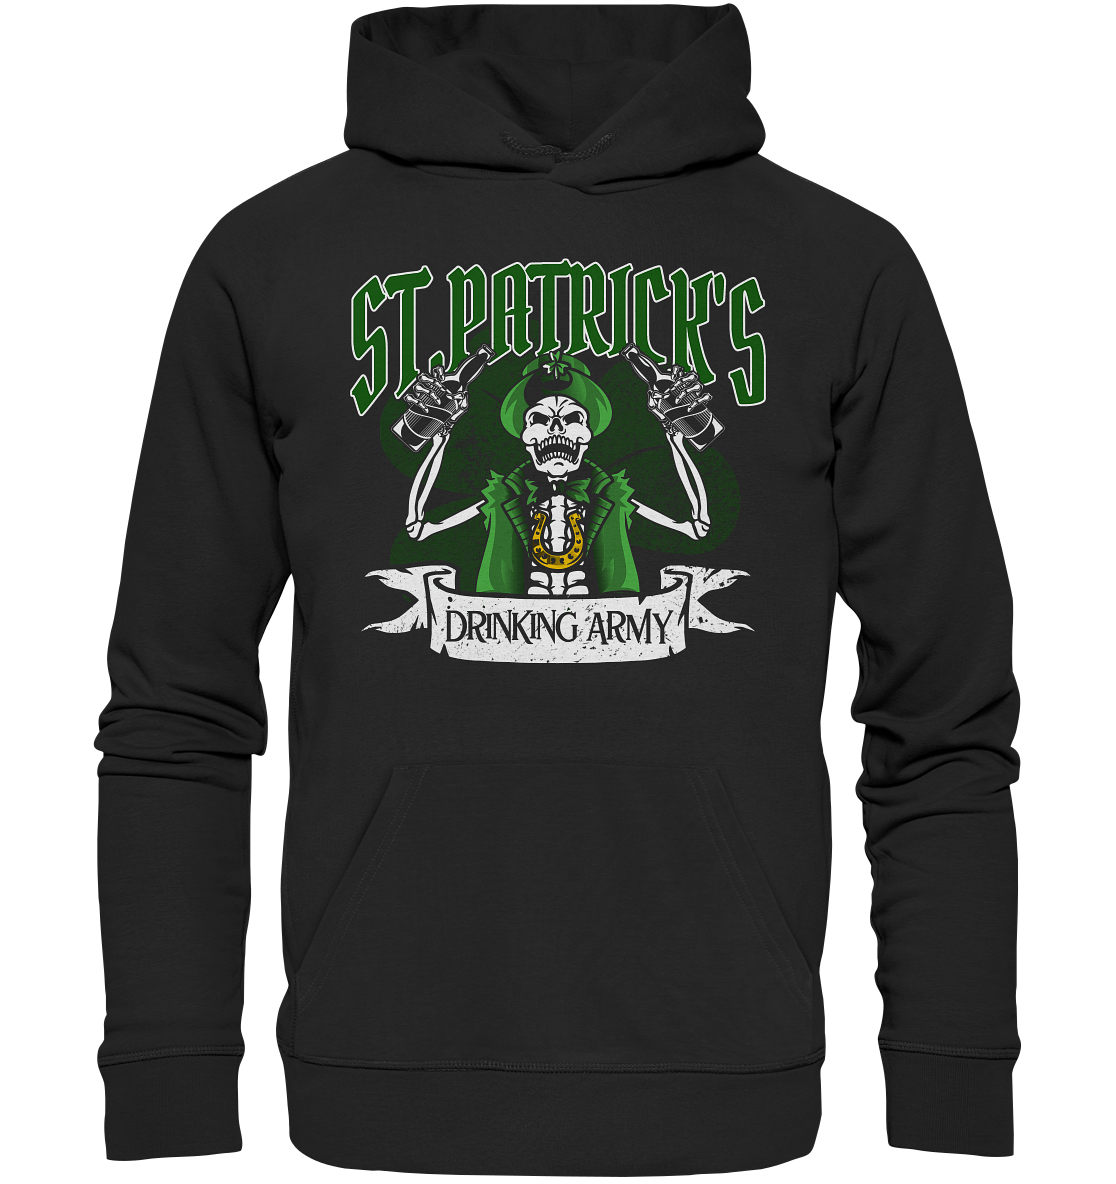 St.Patrick's "Drinking Army" - Premium Unisex Hoodie